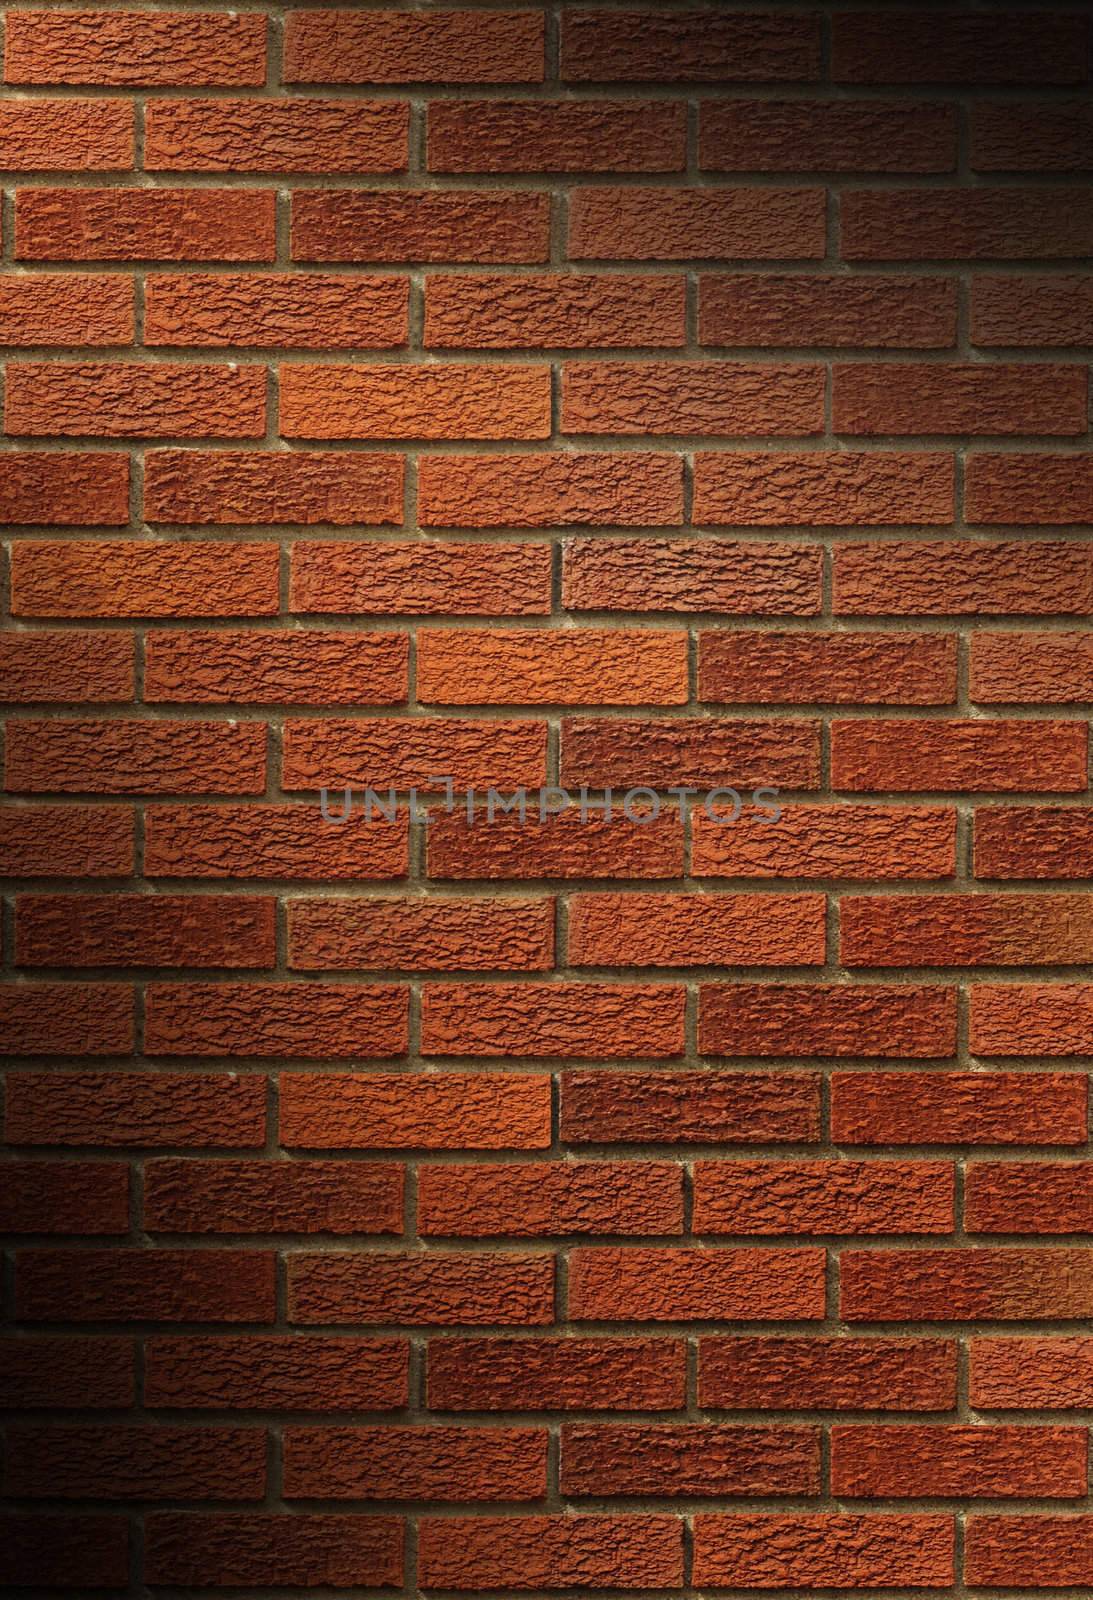 Red brick wall dramatically lit diagonally